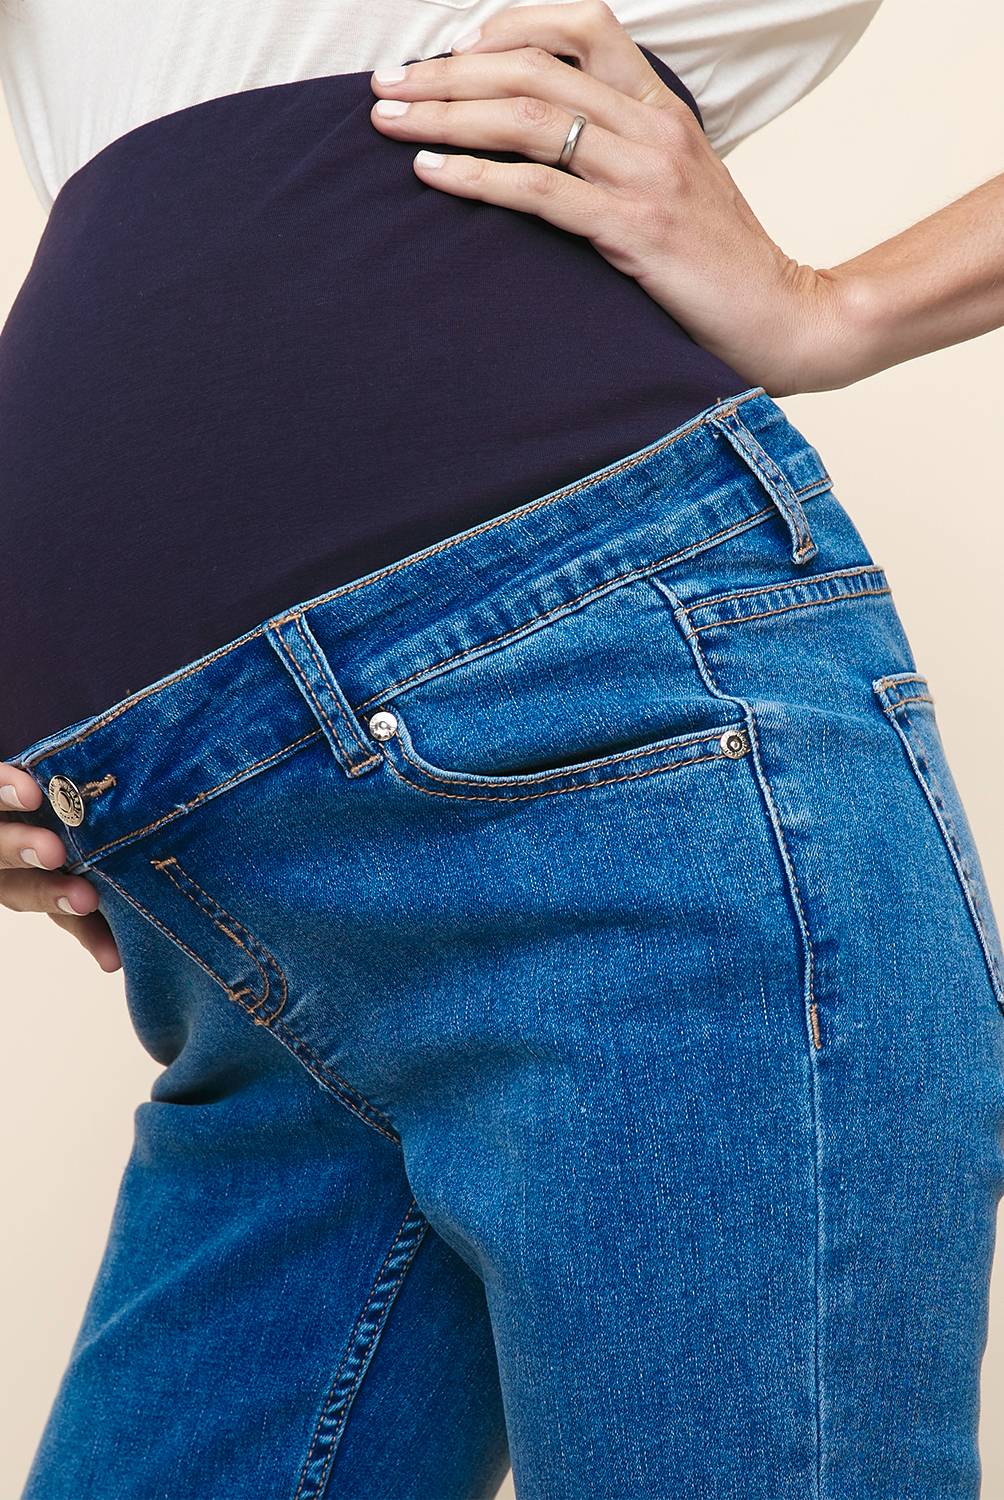 UNIVERSITY CLUB - University Club Jeans Skinny Tiro Bajo Maternal Mujer